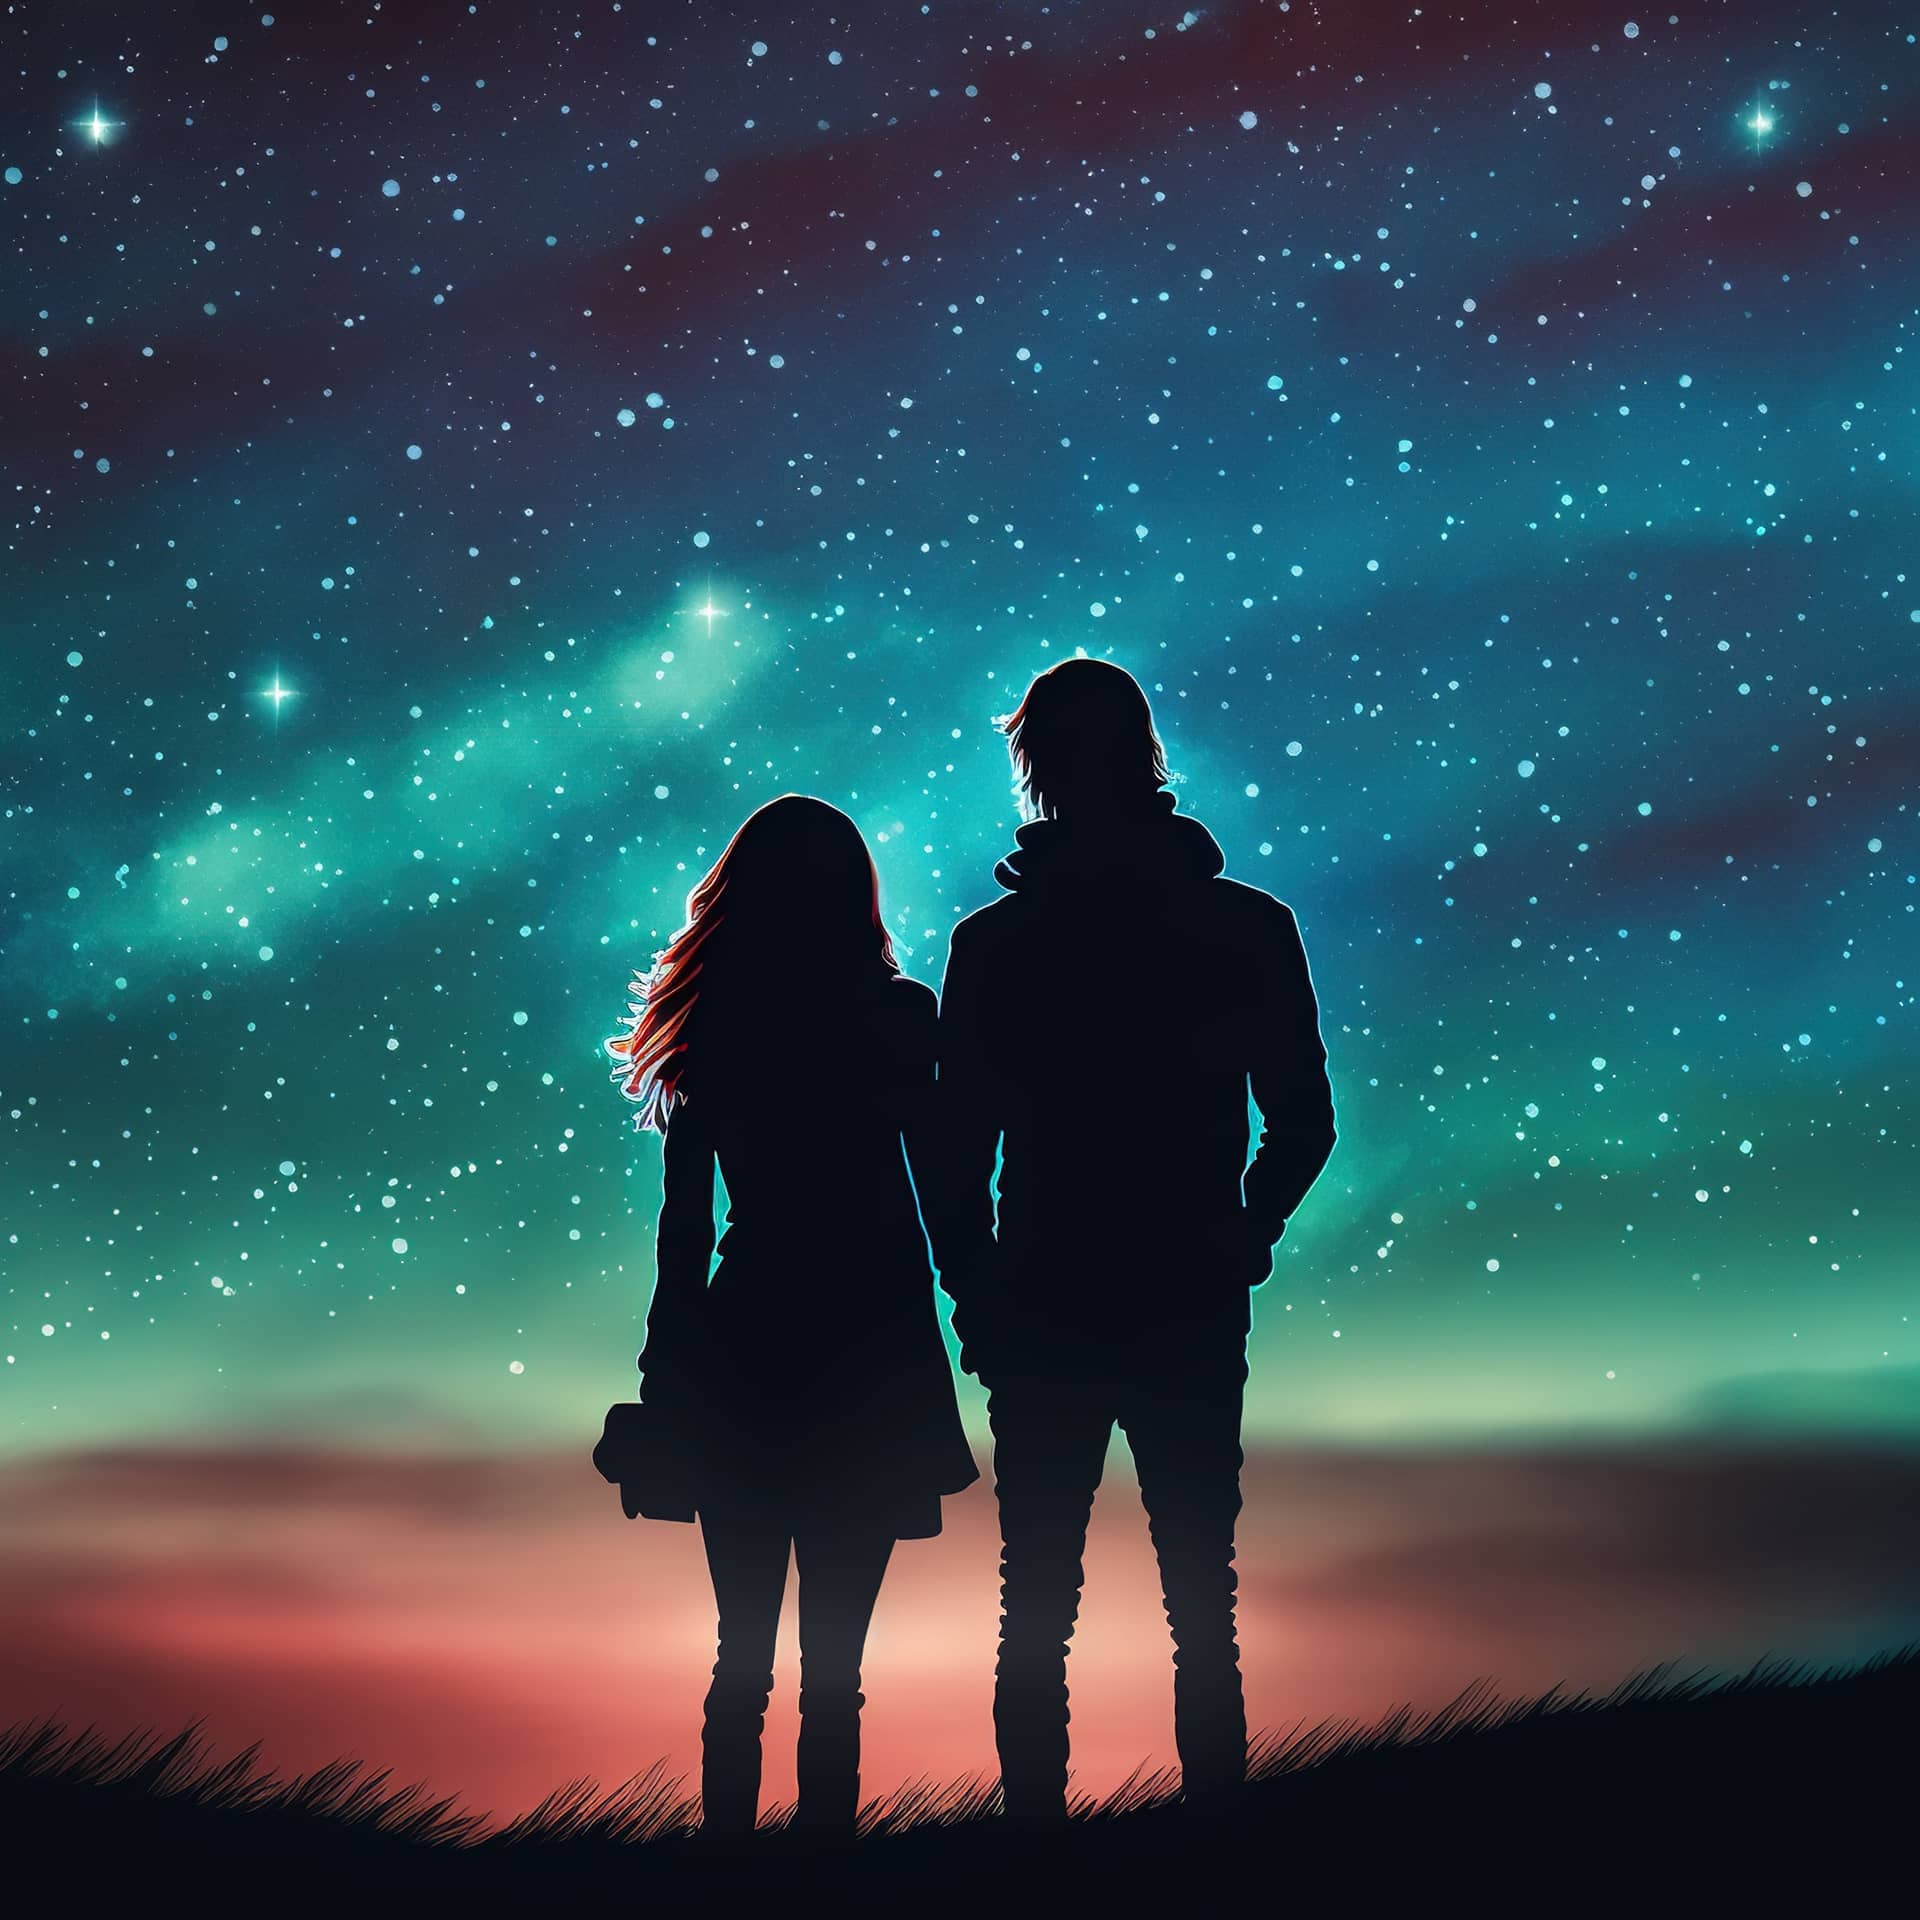 Cool instagram profile pics mysterious light night sky digital art style painting